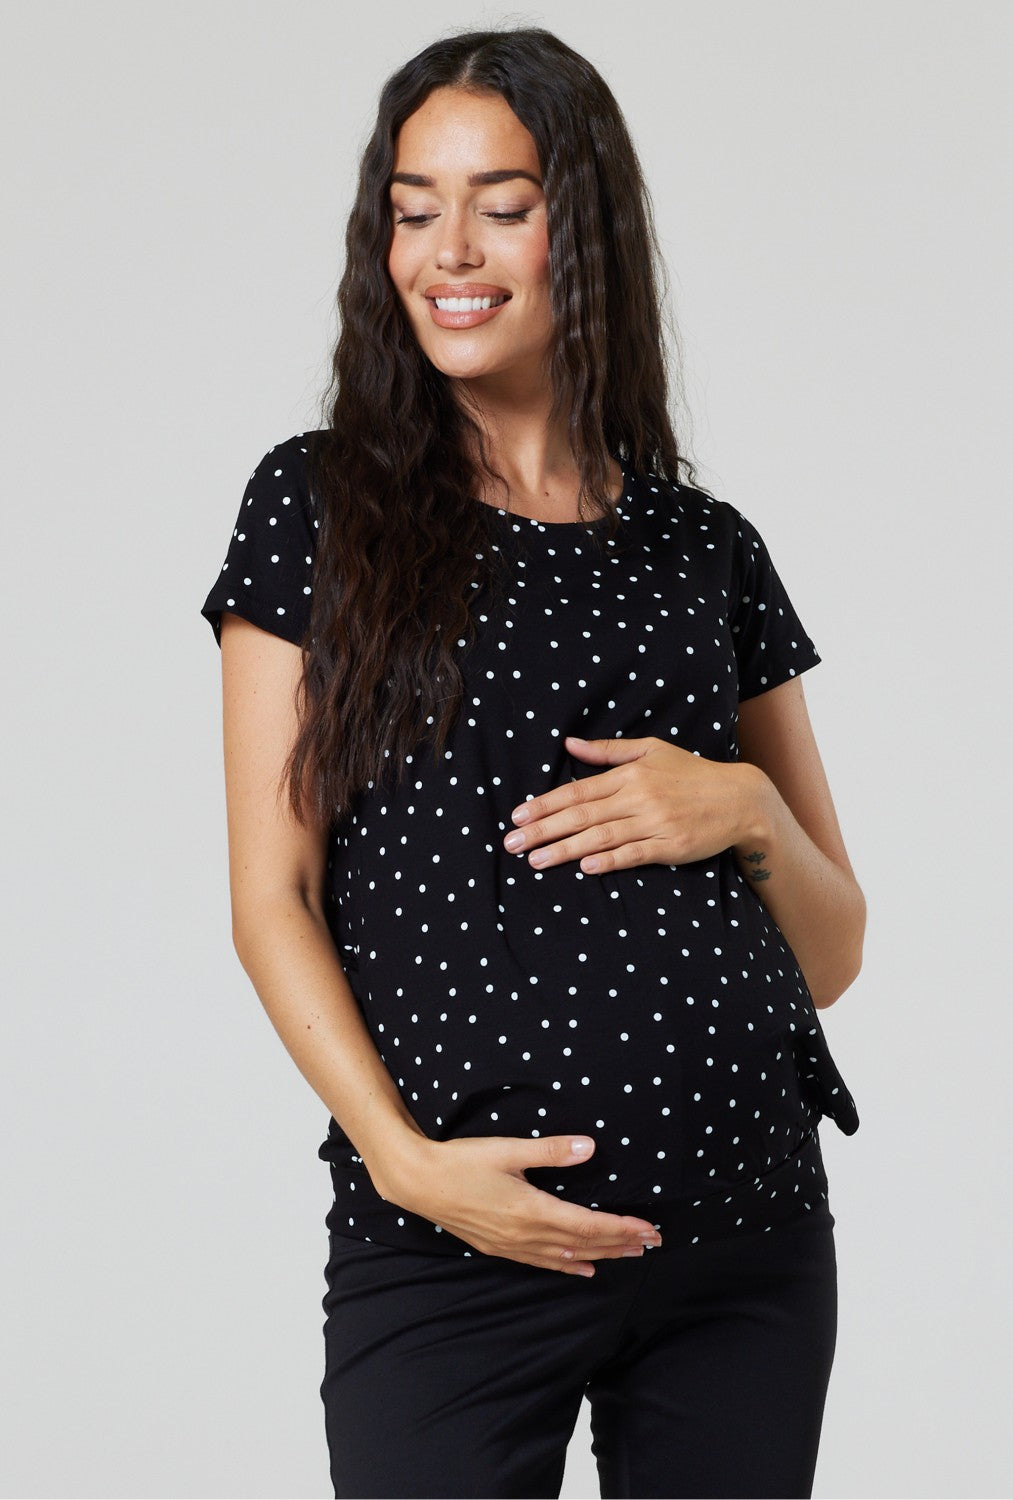 Maternity T-shirt Nursing Layered Top Short Sleeves